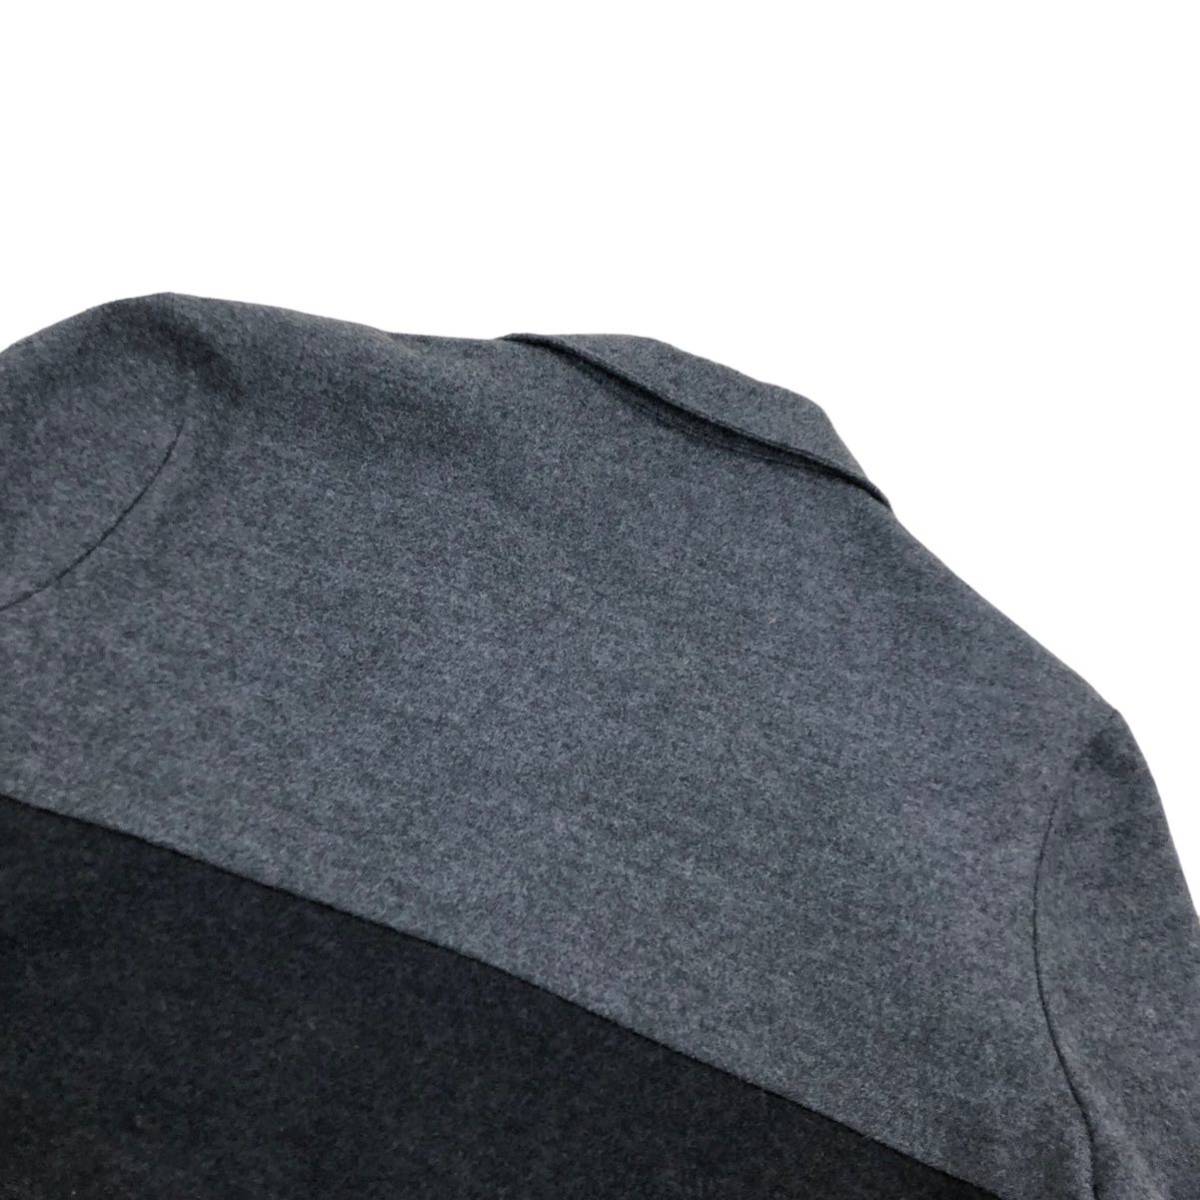 S156 Jocomomola ホコモモラ ジャケット 上着 羽織り トップス 長袖 毛100% レディース 40 ブラック 黒 グレー_画像6